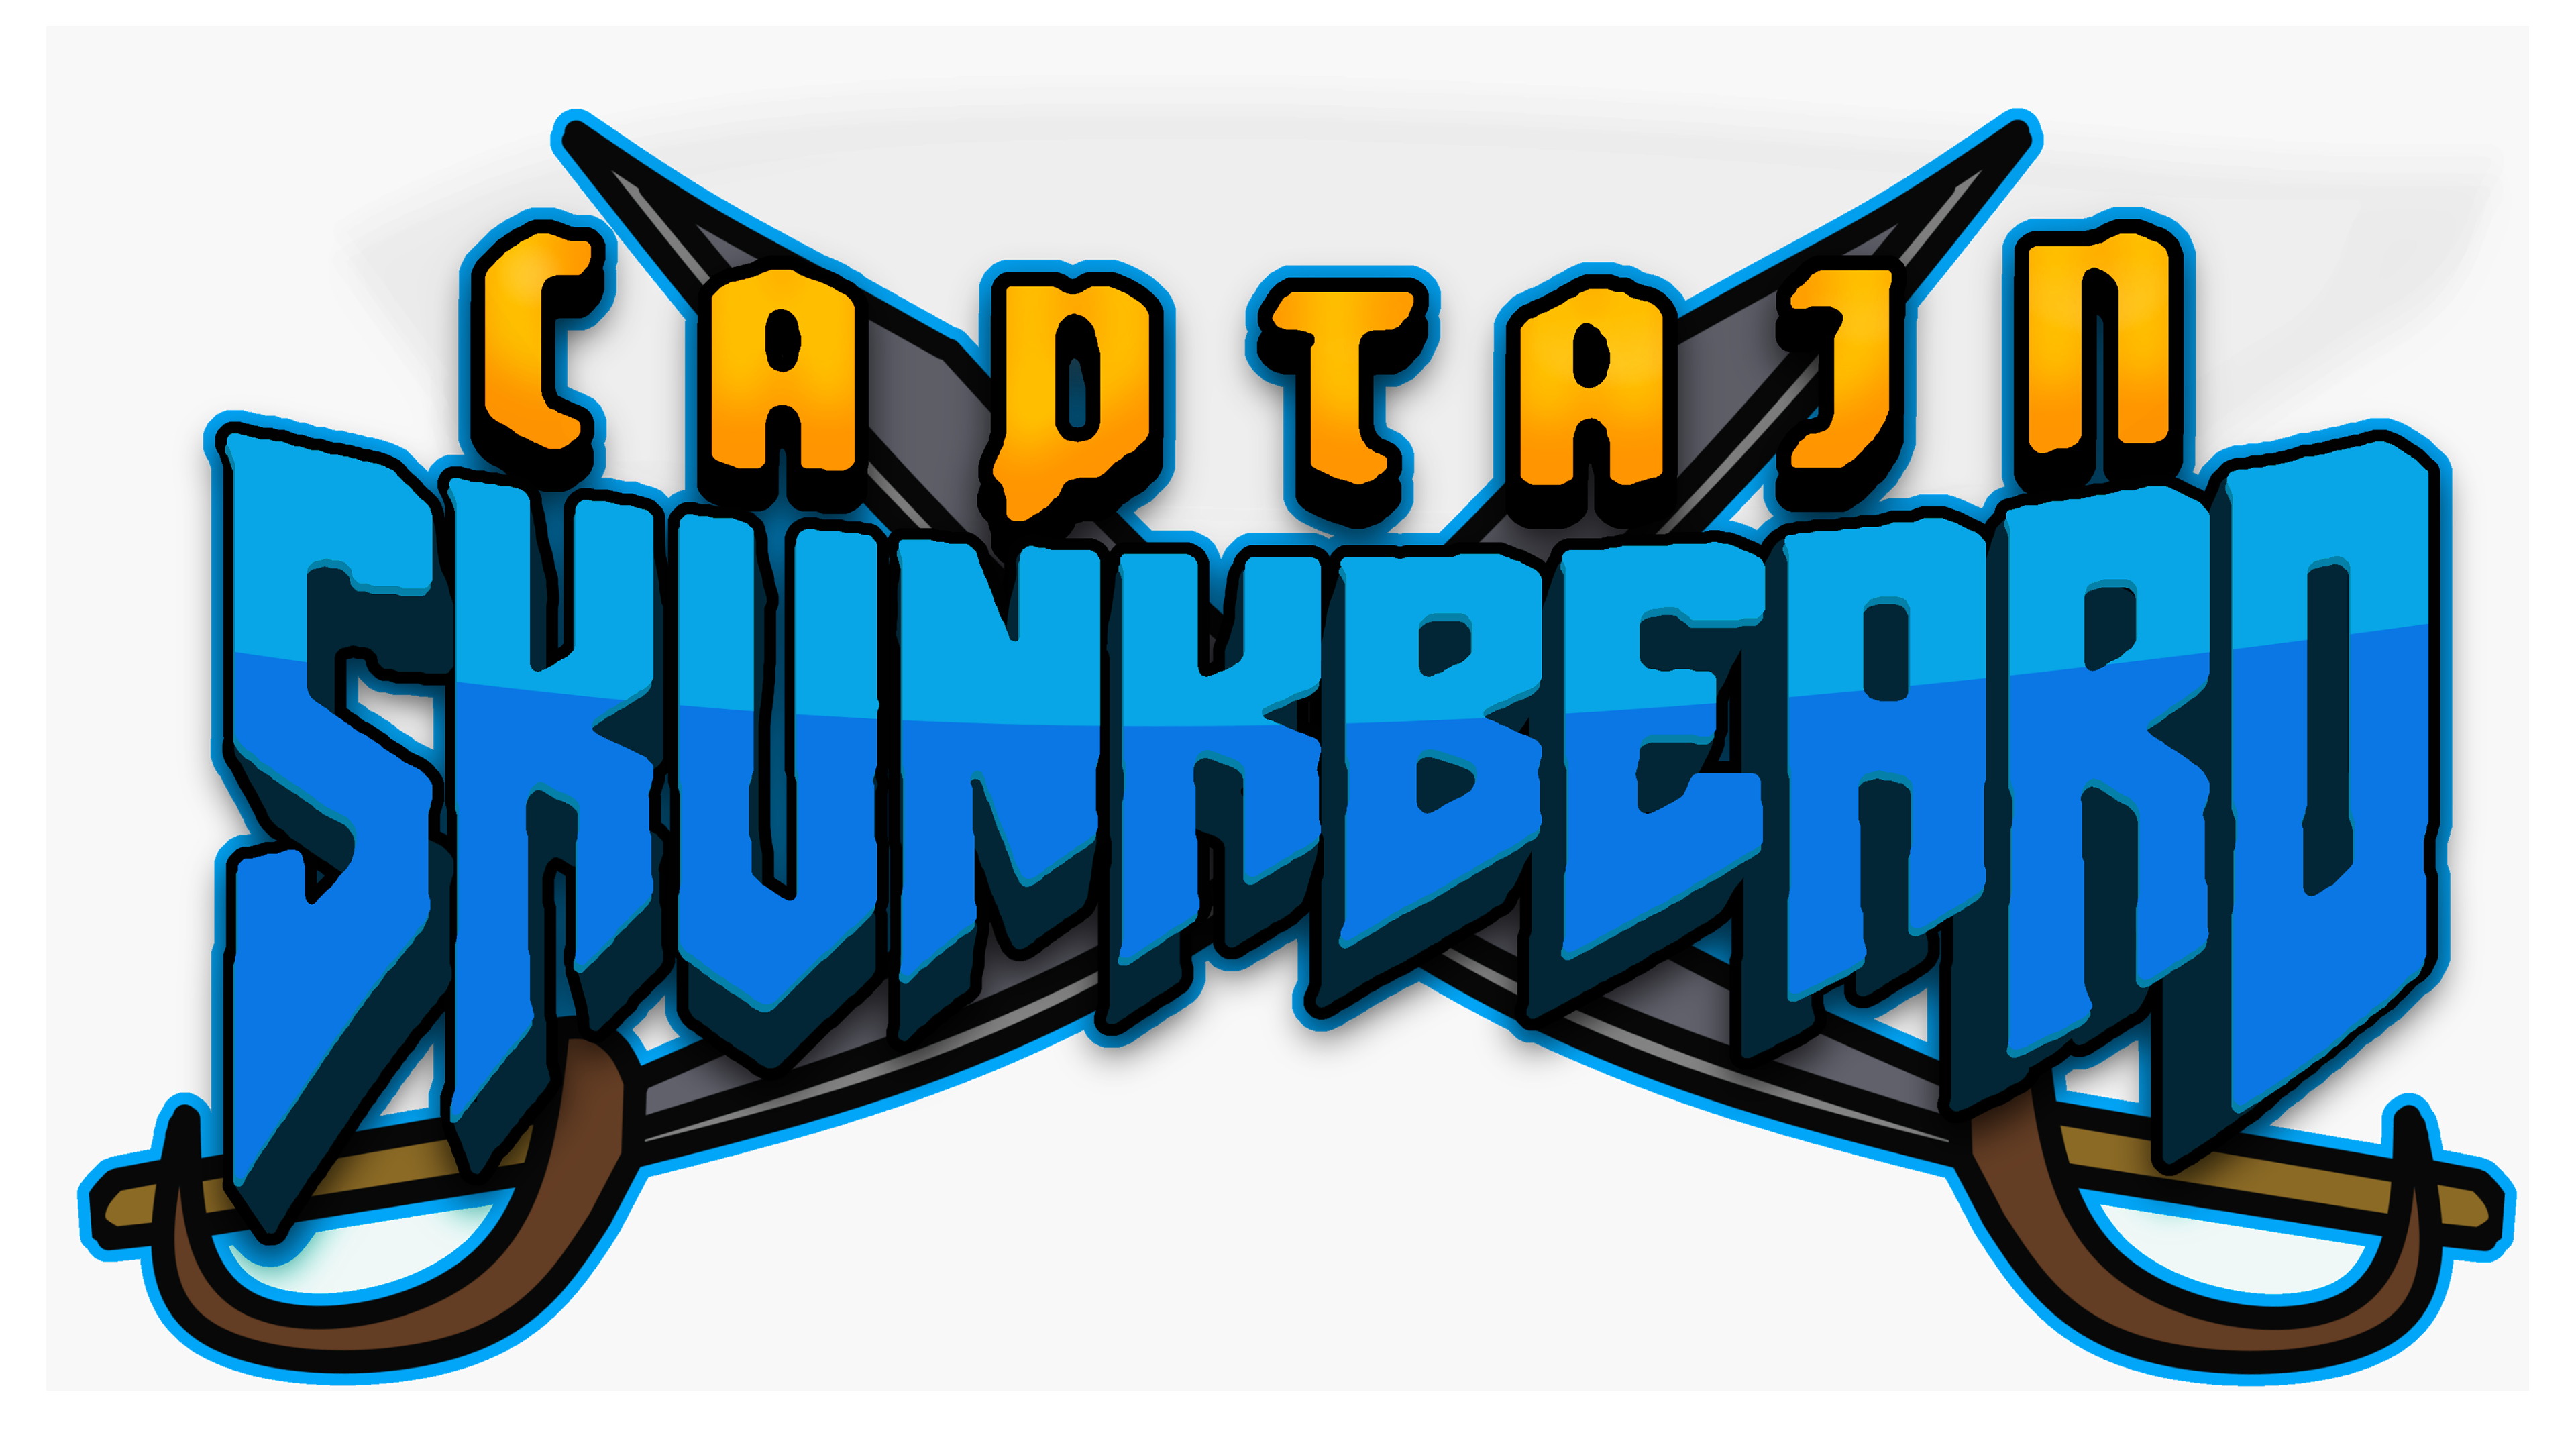 Captain Skunkbeard